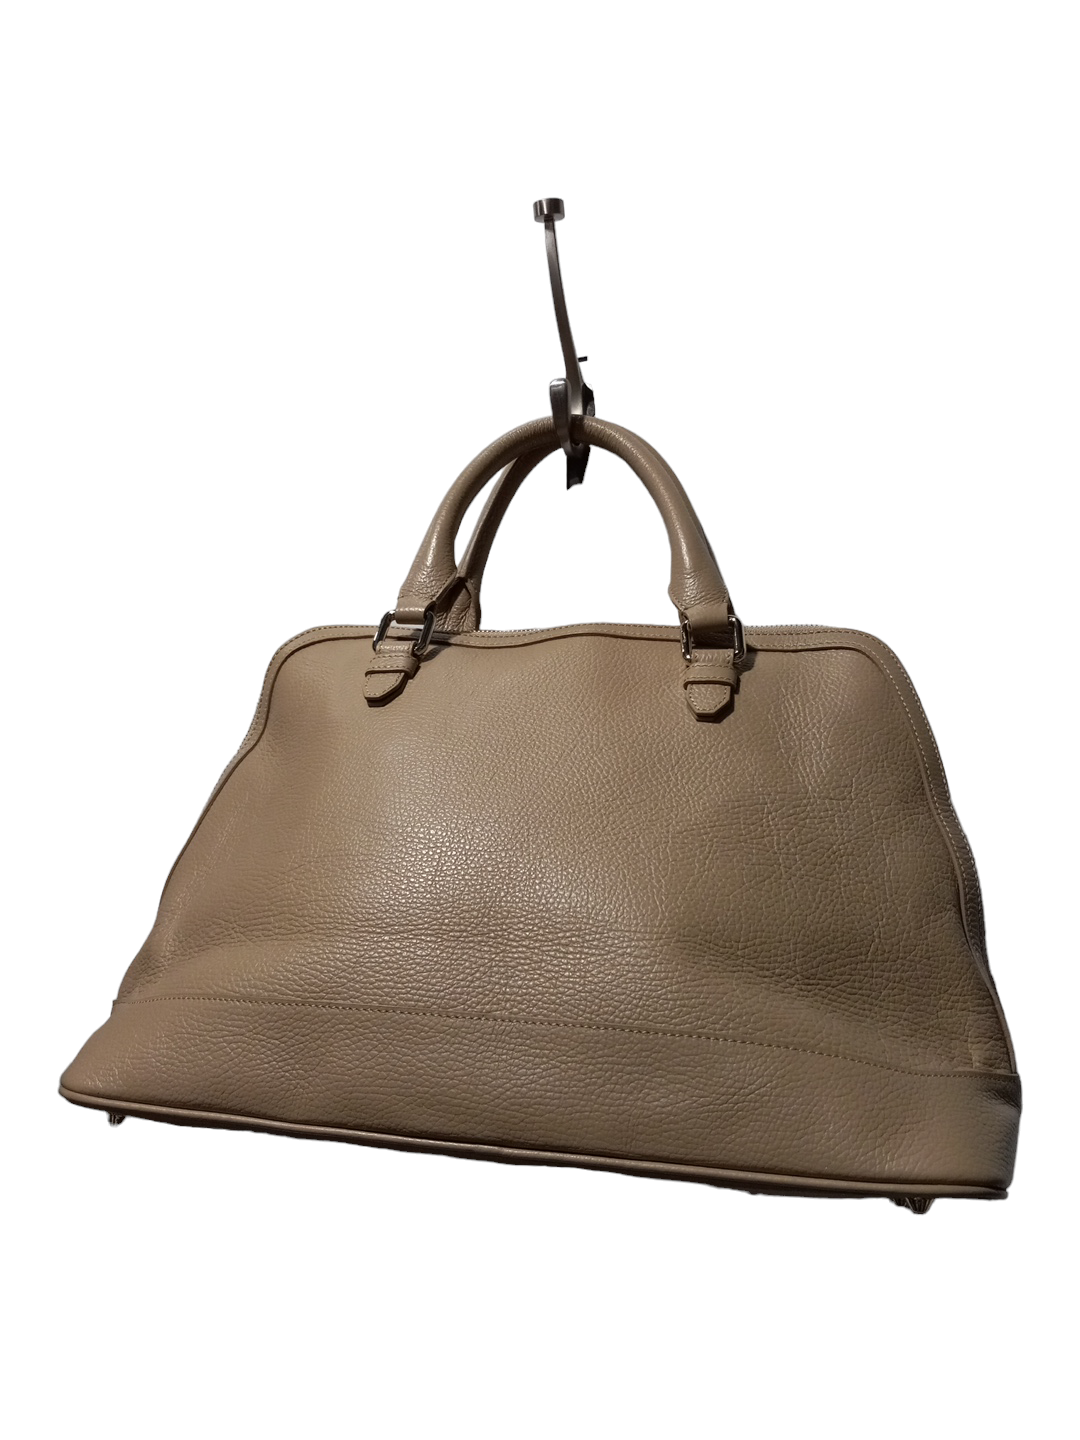 Handbag Designer Versace, Size Large